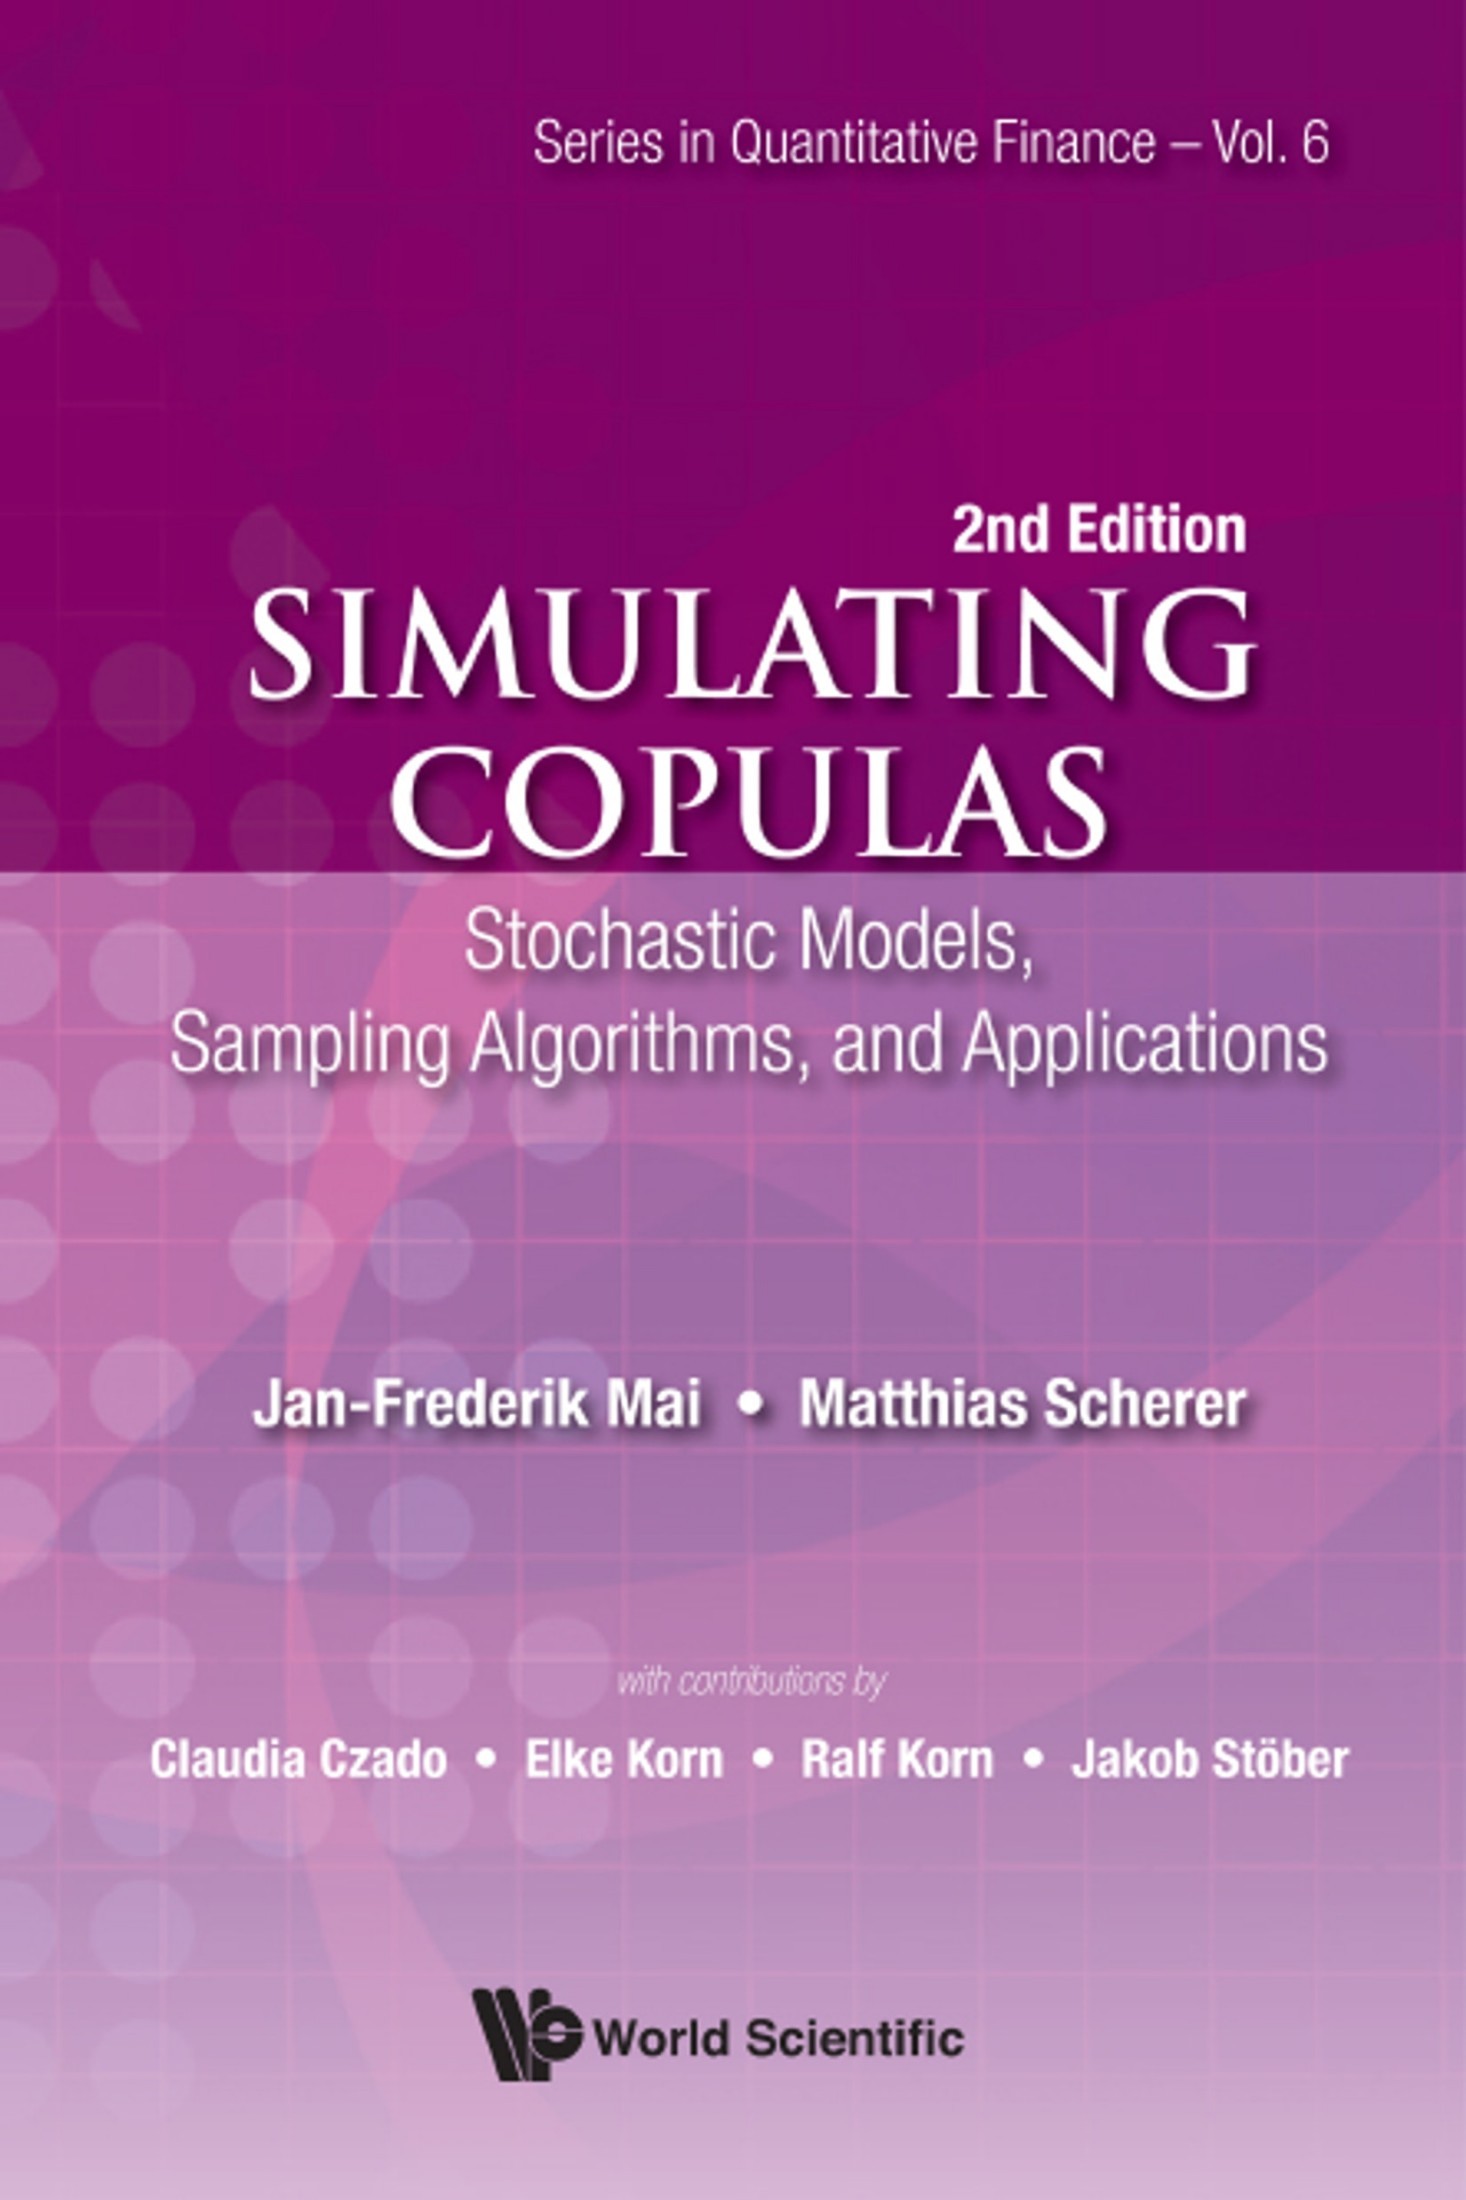 Simulating Copulas: Stochastic Models, Sampling Algorithms, and Applications - Volume 6